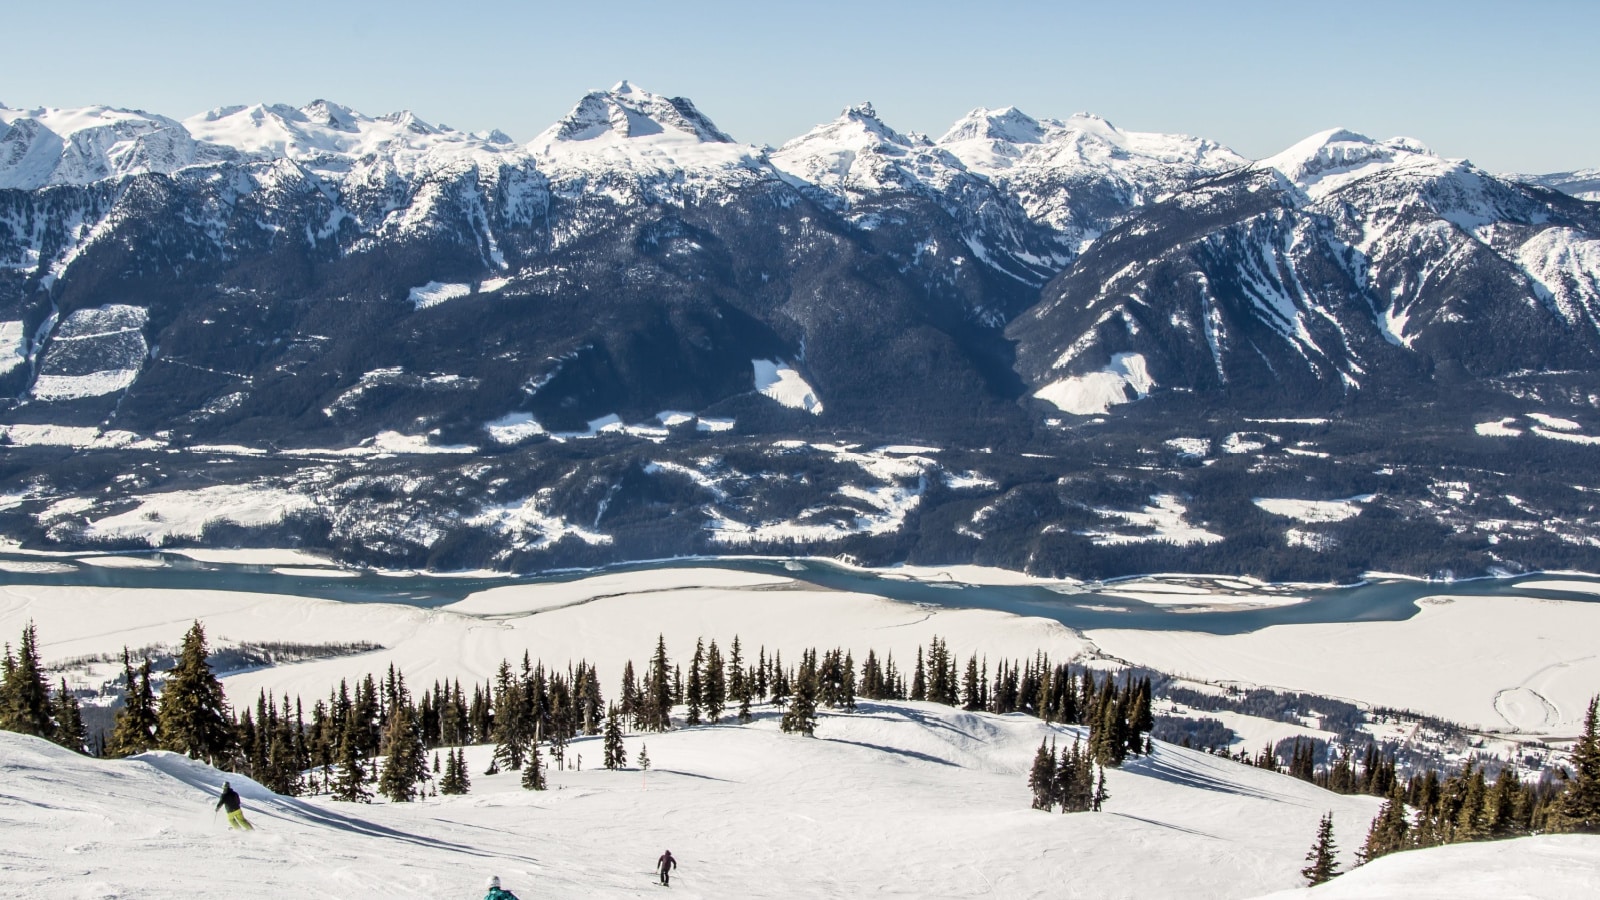 People skiing in Revelstoke Mountain ski Resort, British Columbia, Canada